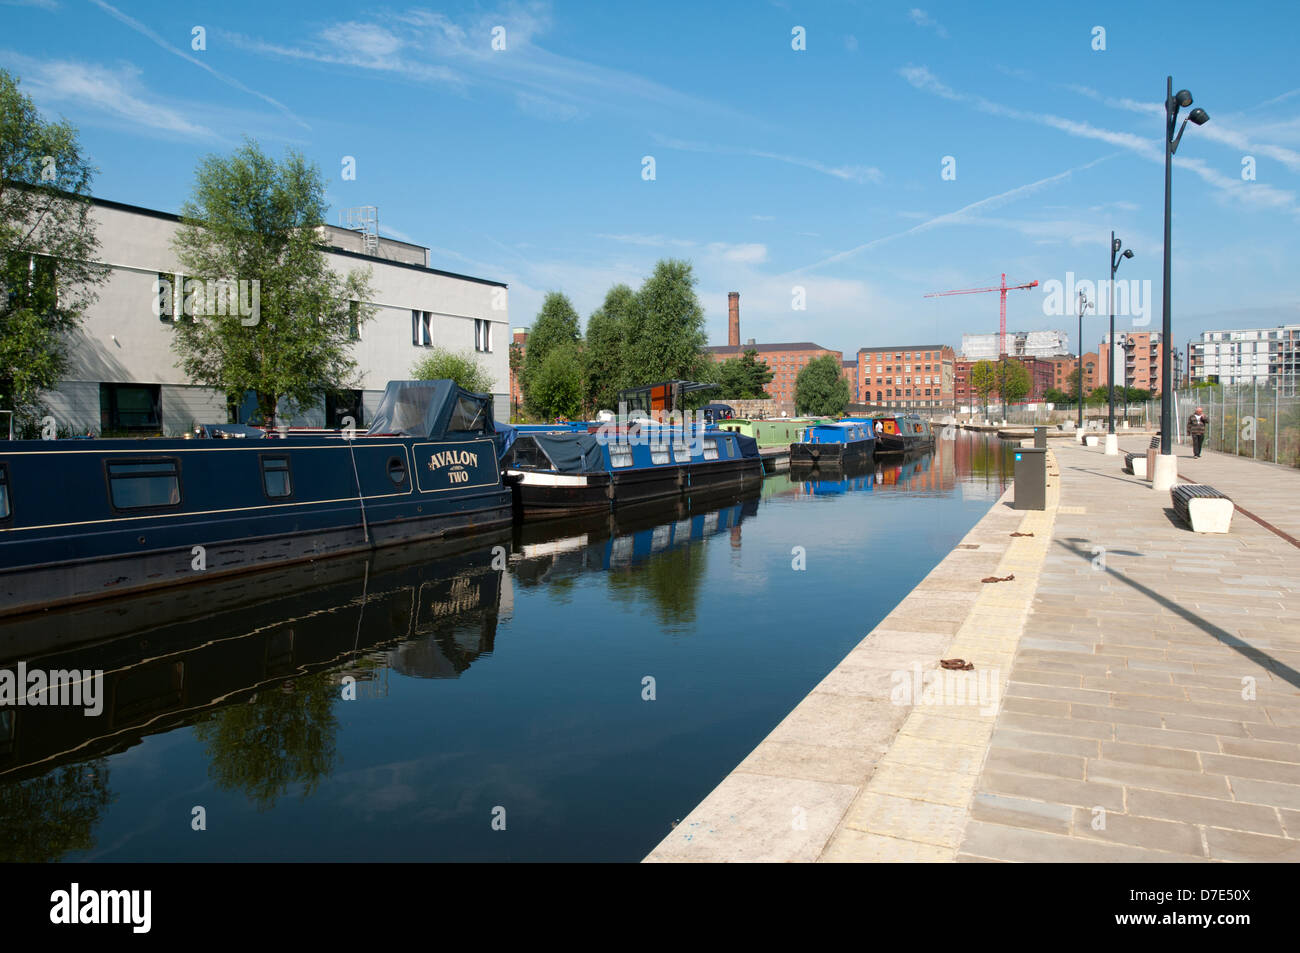 Canal narrowboats reflected in the Cotton Field Park marina, New Islington, Ancoats, Manchester, England, UK Stock Photo